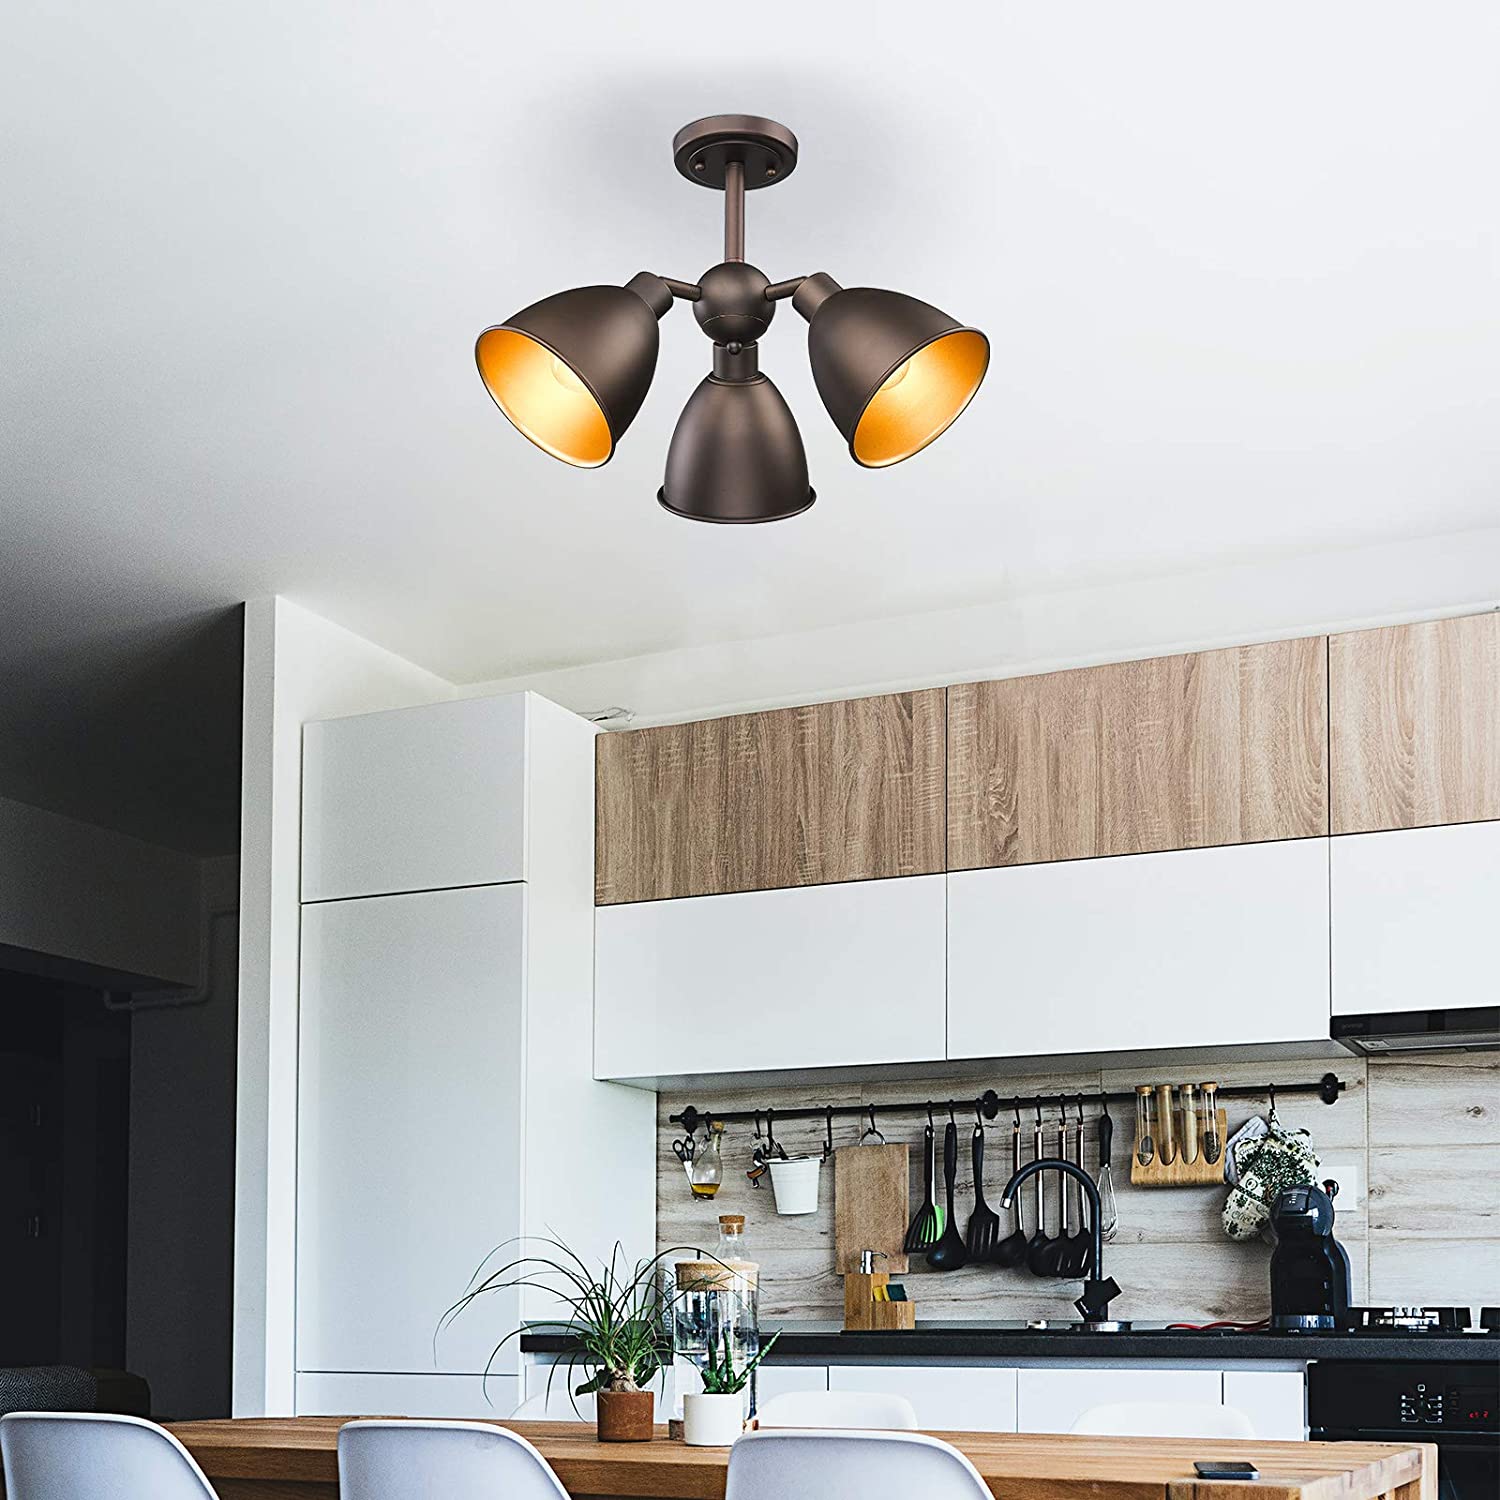 3 light spot ceiling light fixture industrial pendant flush mount ceiling lamp with bronze finish